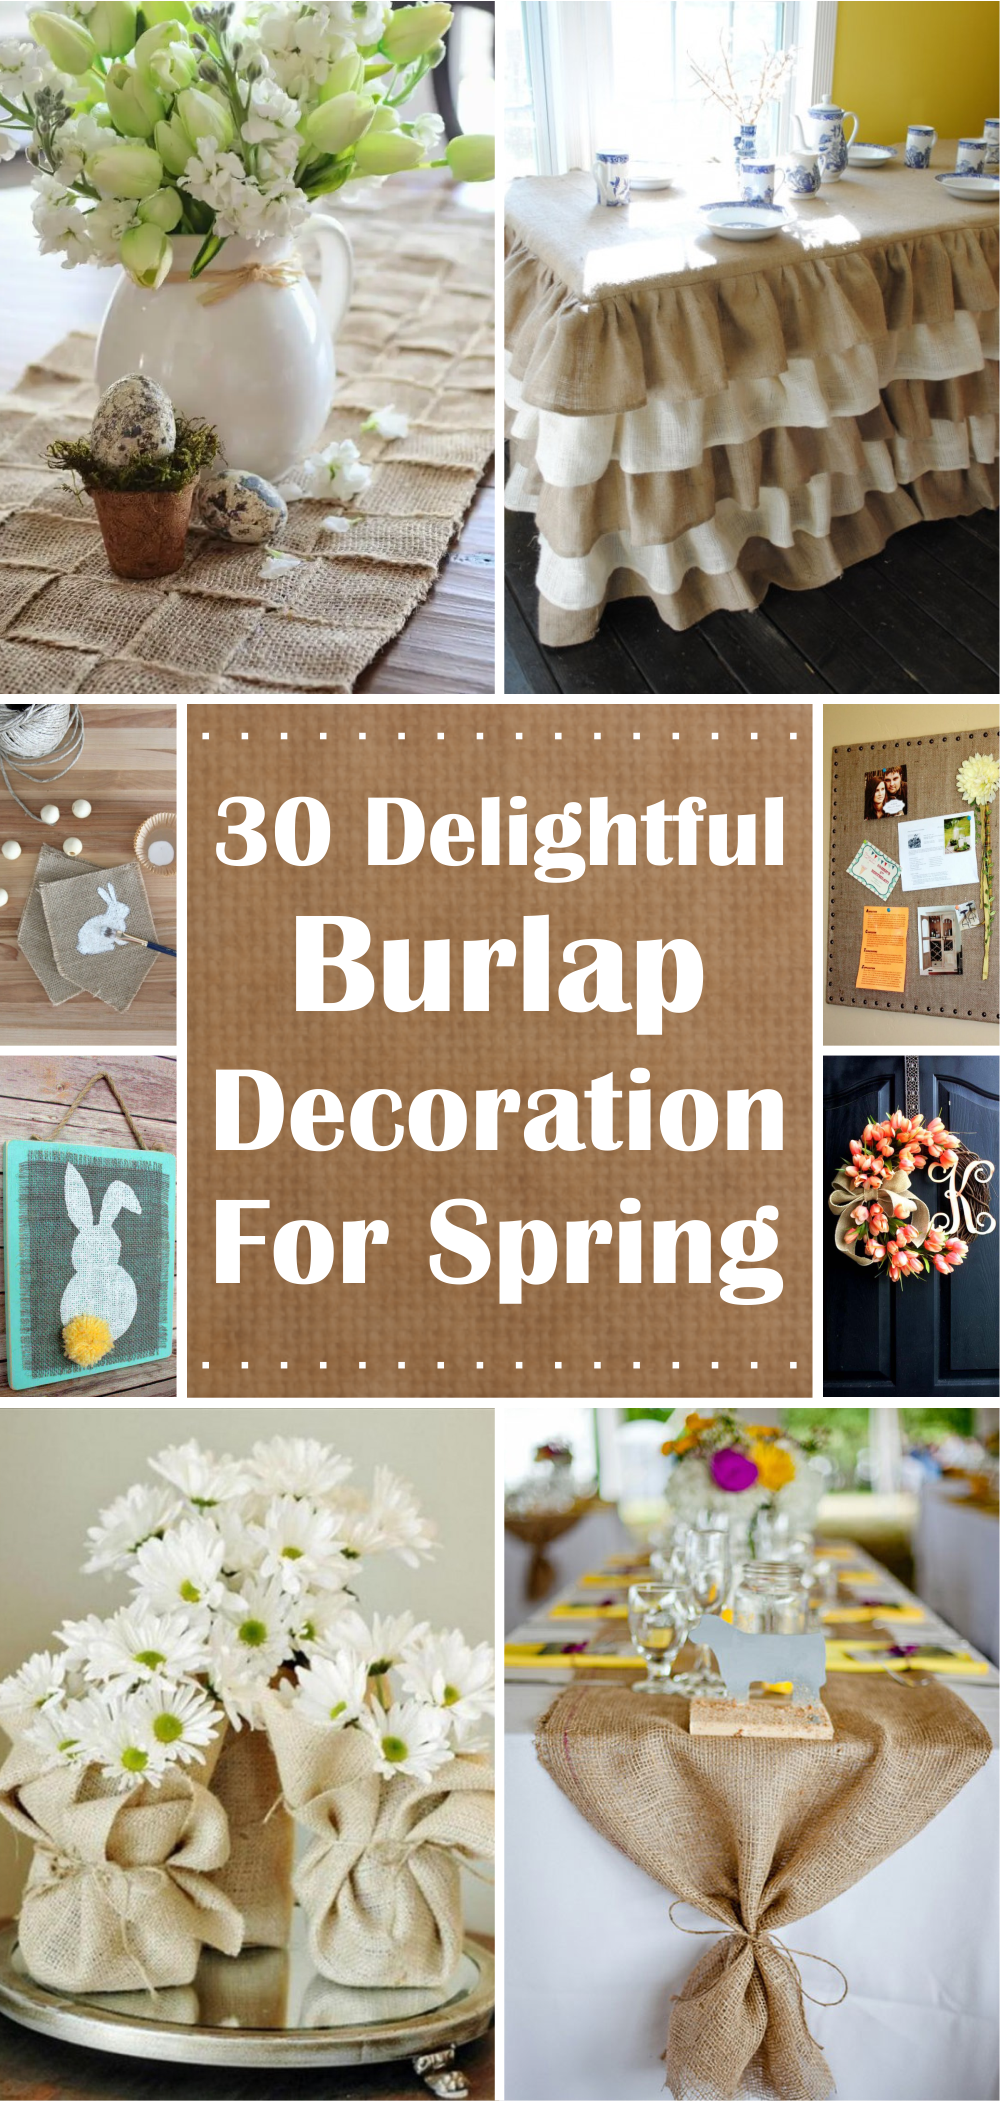 30 delightful burlap decoration for spring1